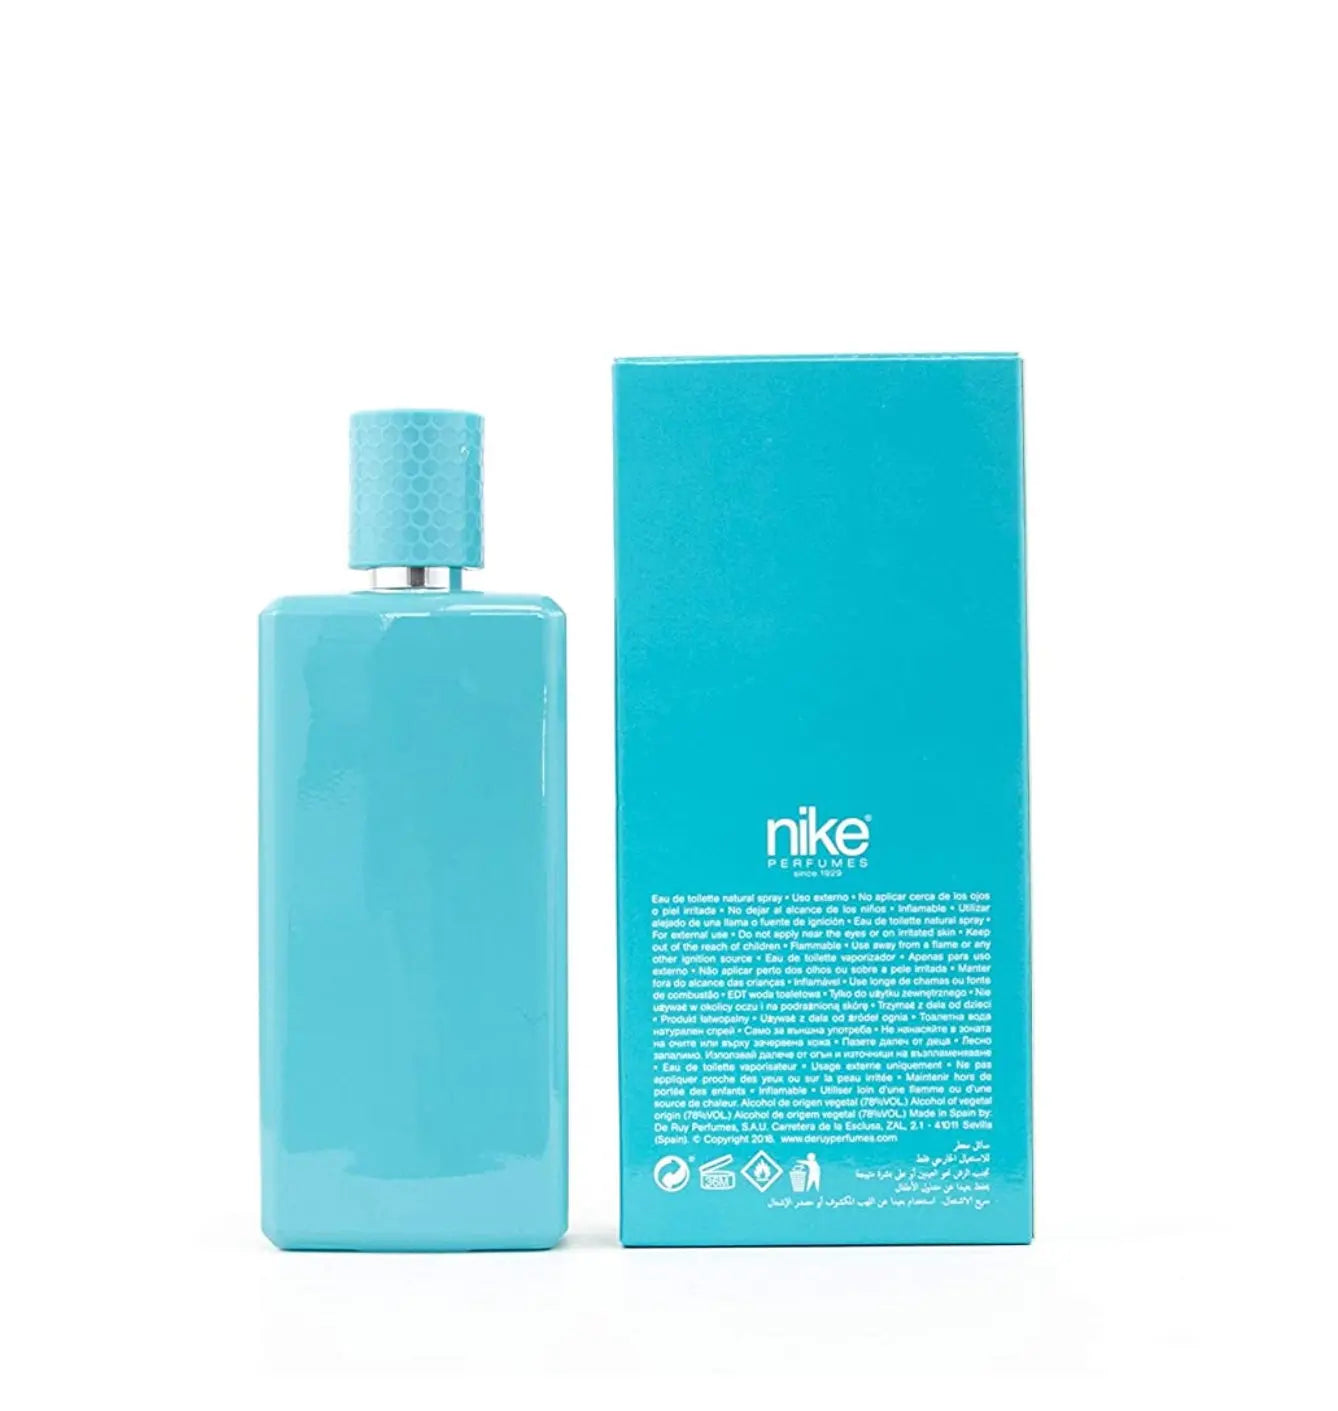 Nike Azure Woman Eau De Toilette Spray 100ml Imported Perfumes & Beauty Store